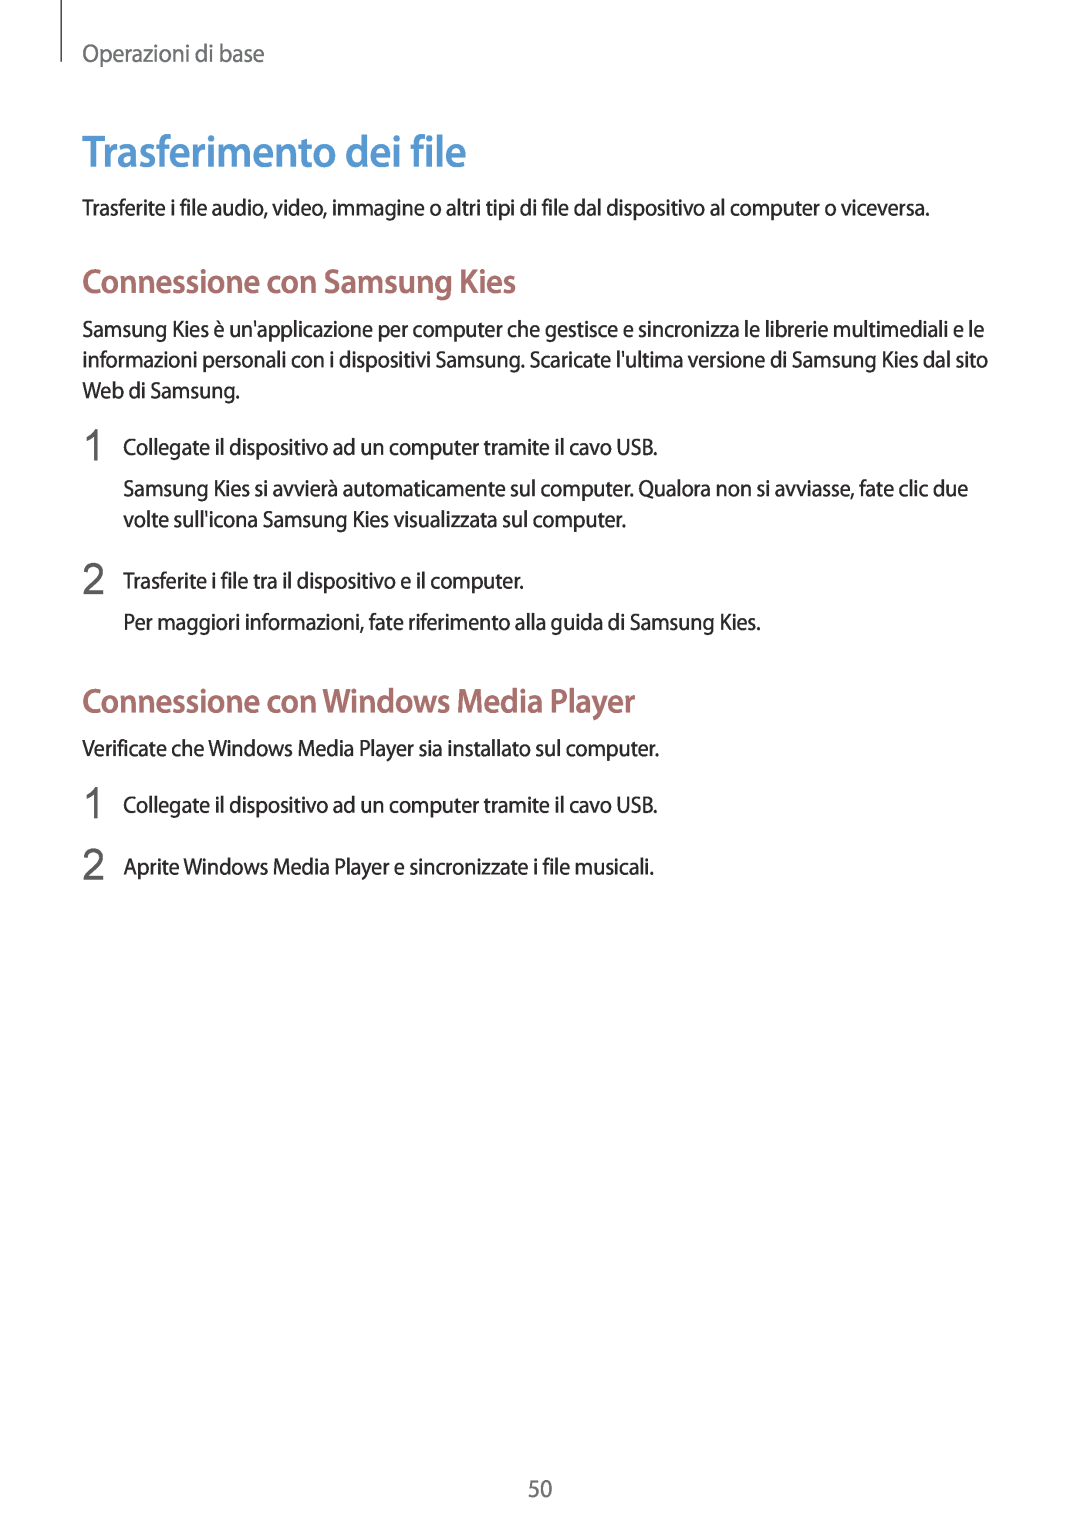 Samsung GT-N7100RWDTUR manual Trasferimento dei file, Connessione con Samsung Kies, Connessione con Windows Media Player 